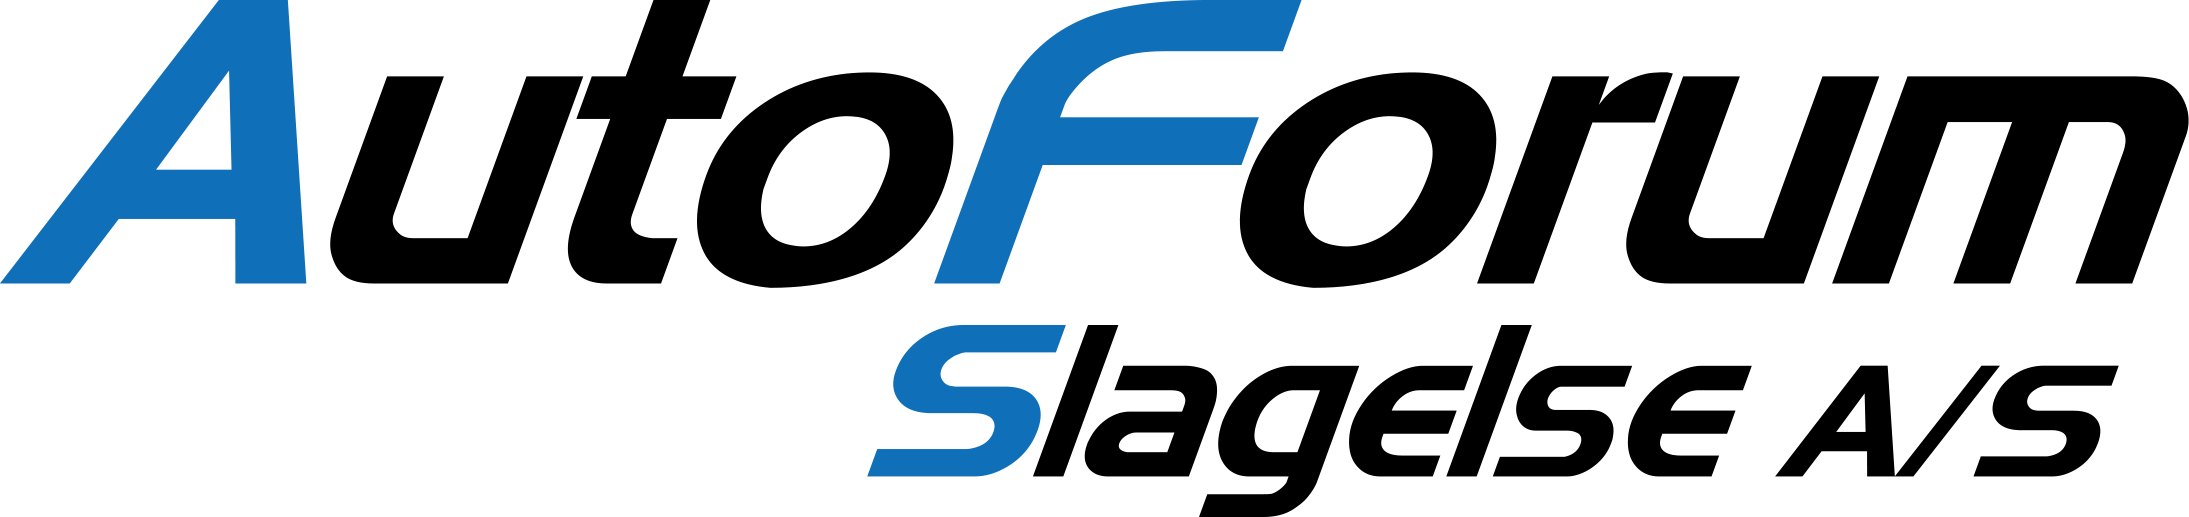 Autoforum Slagelse logo